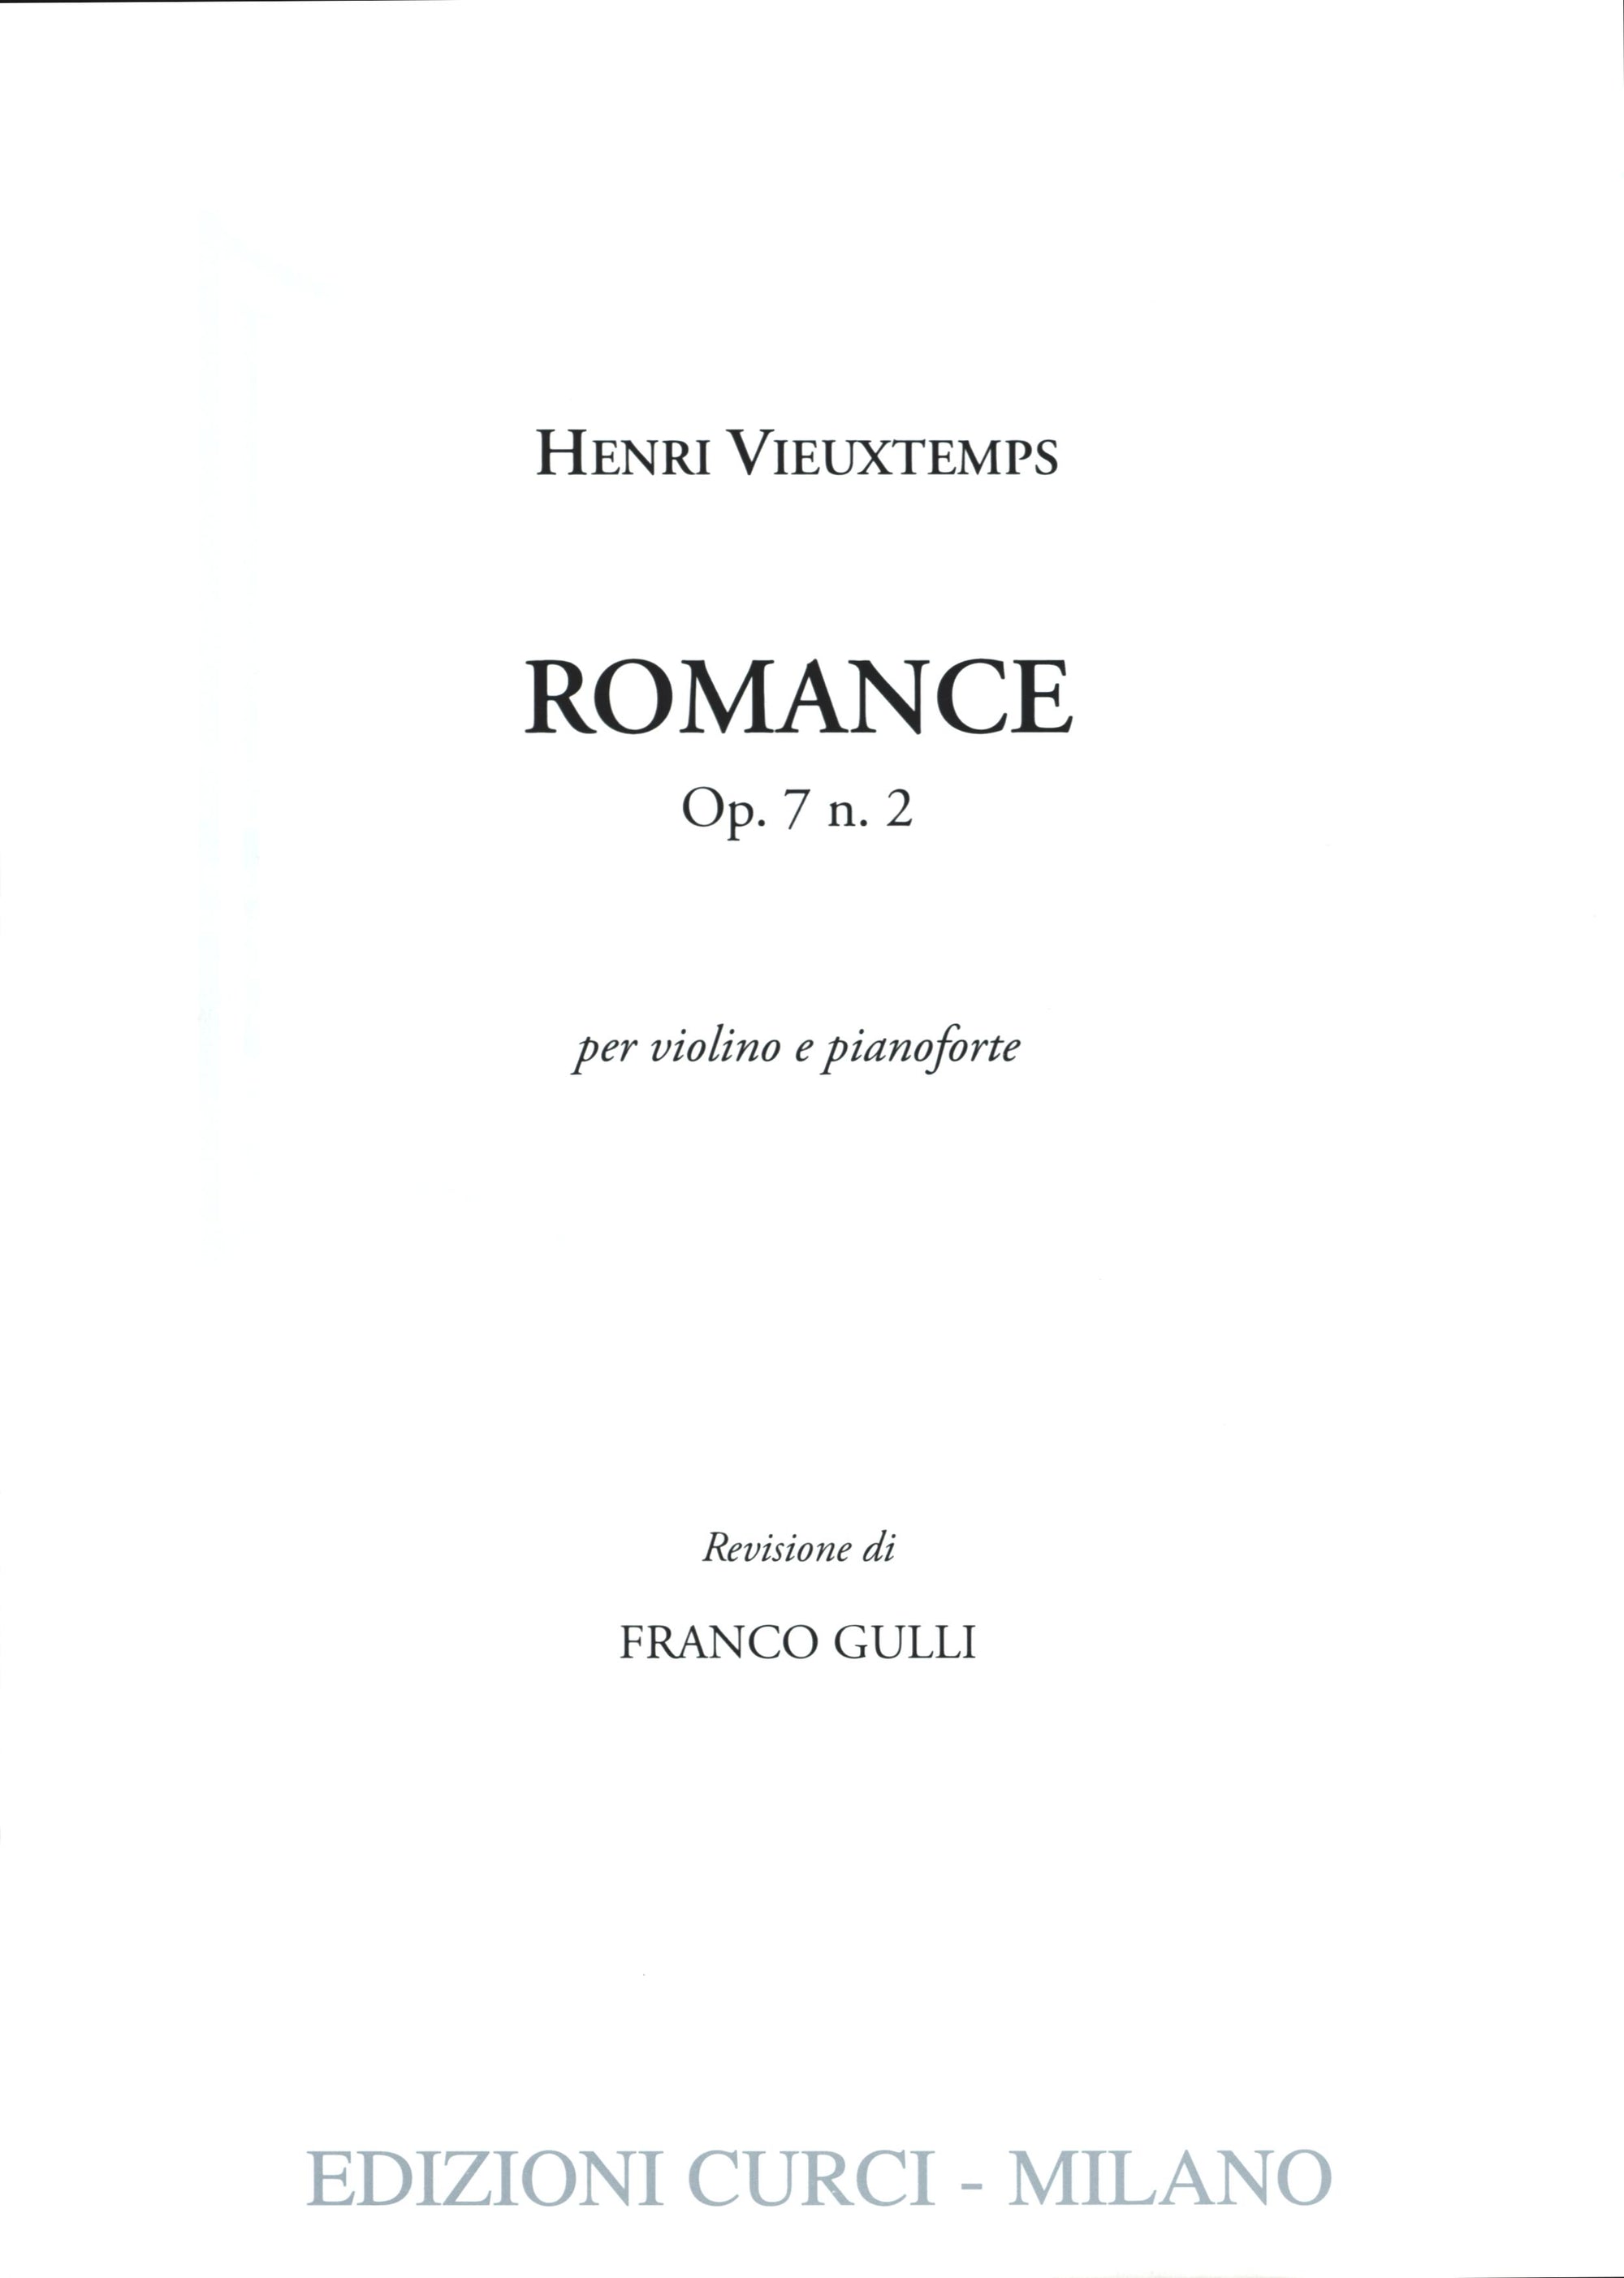 Vieuxtemps: Romance, Op. 7, No. 2